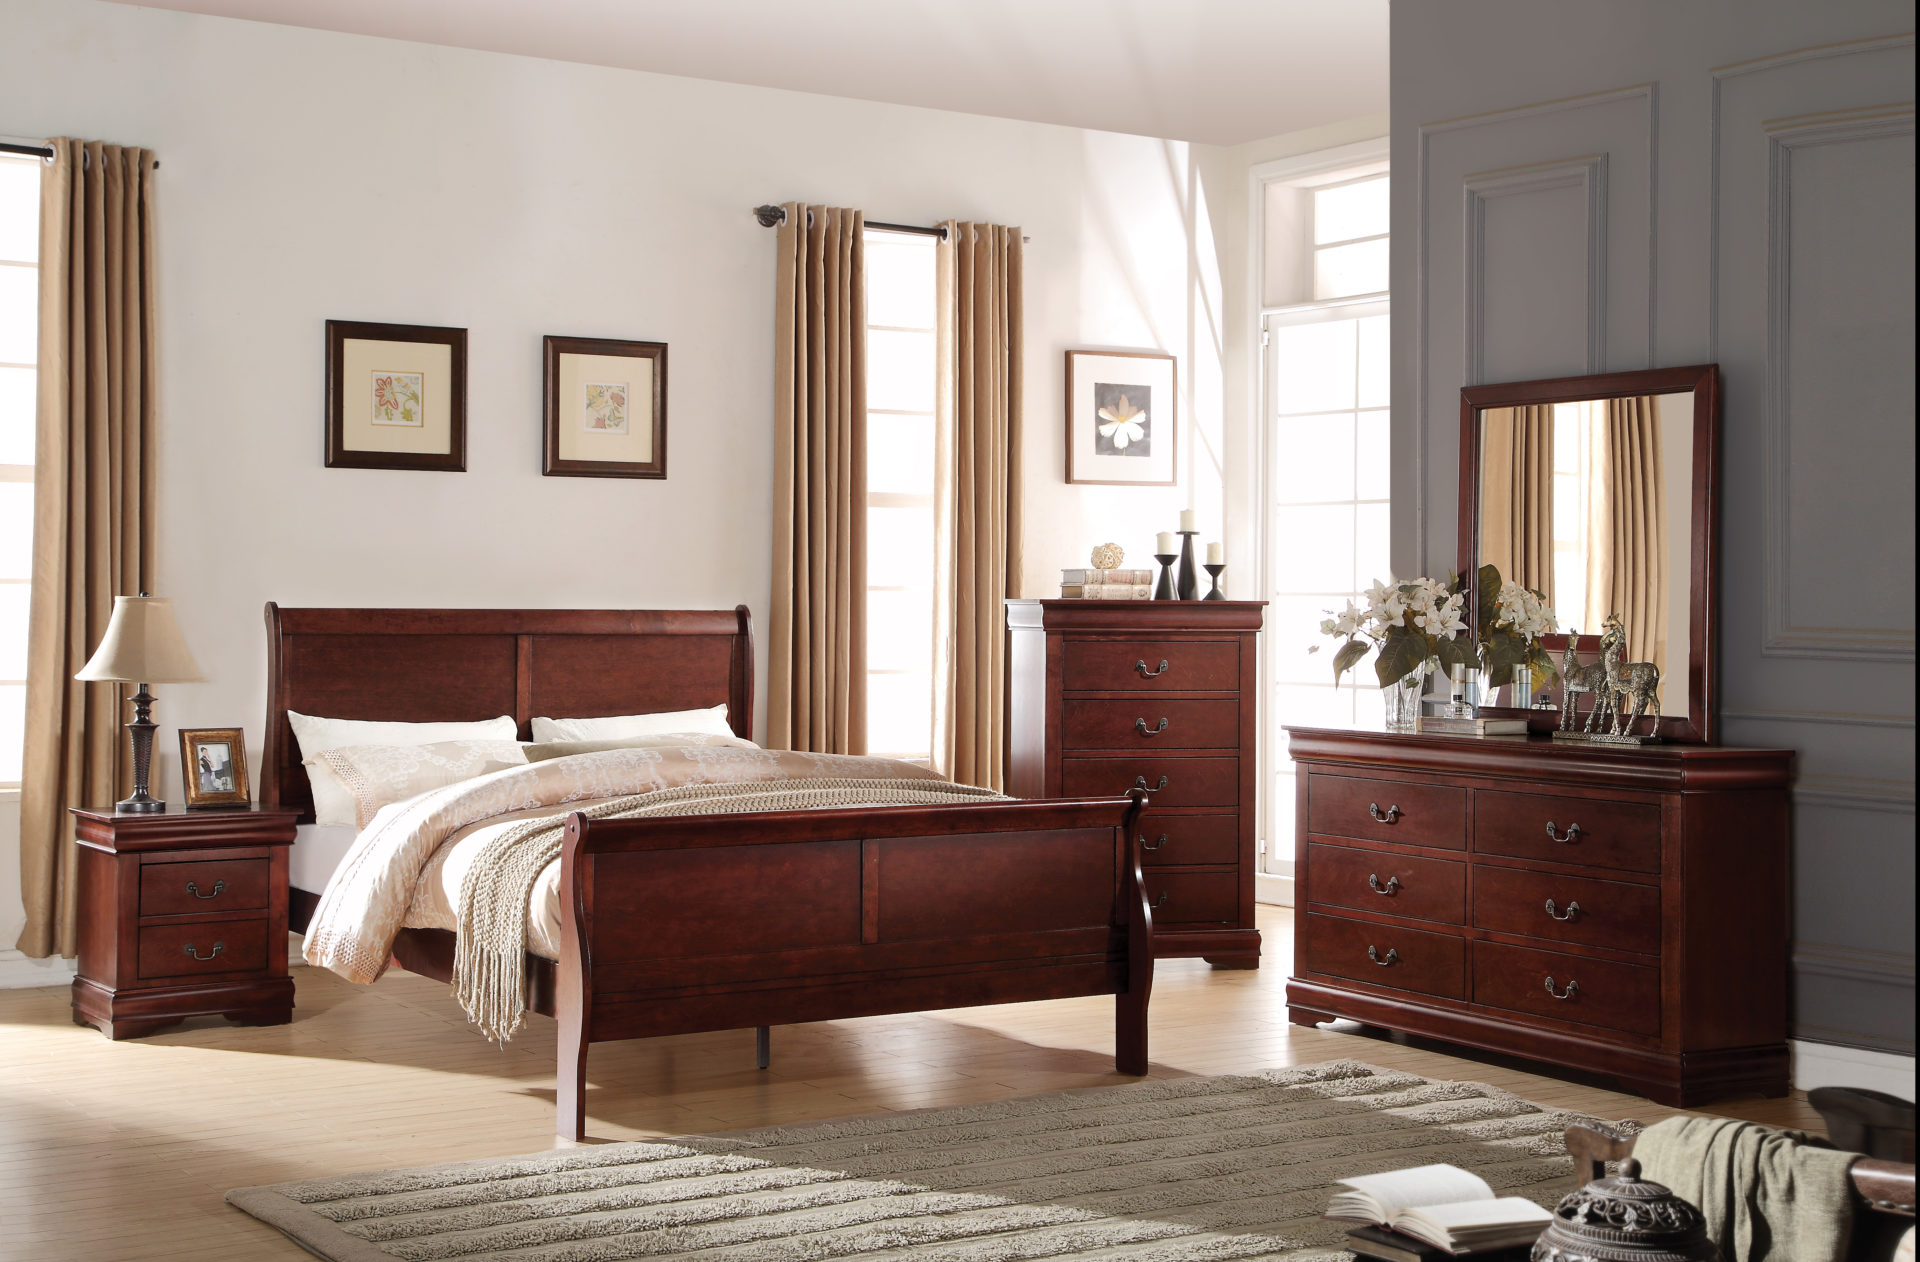 louis bedroom furniture sale